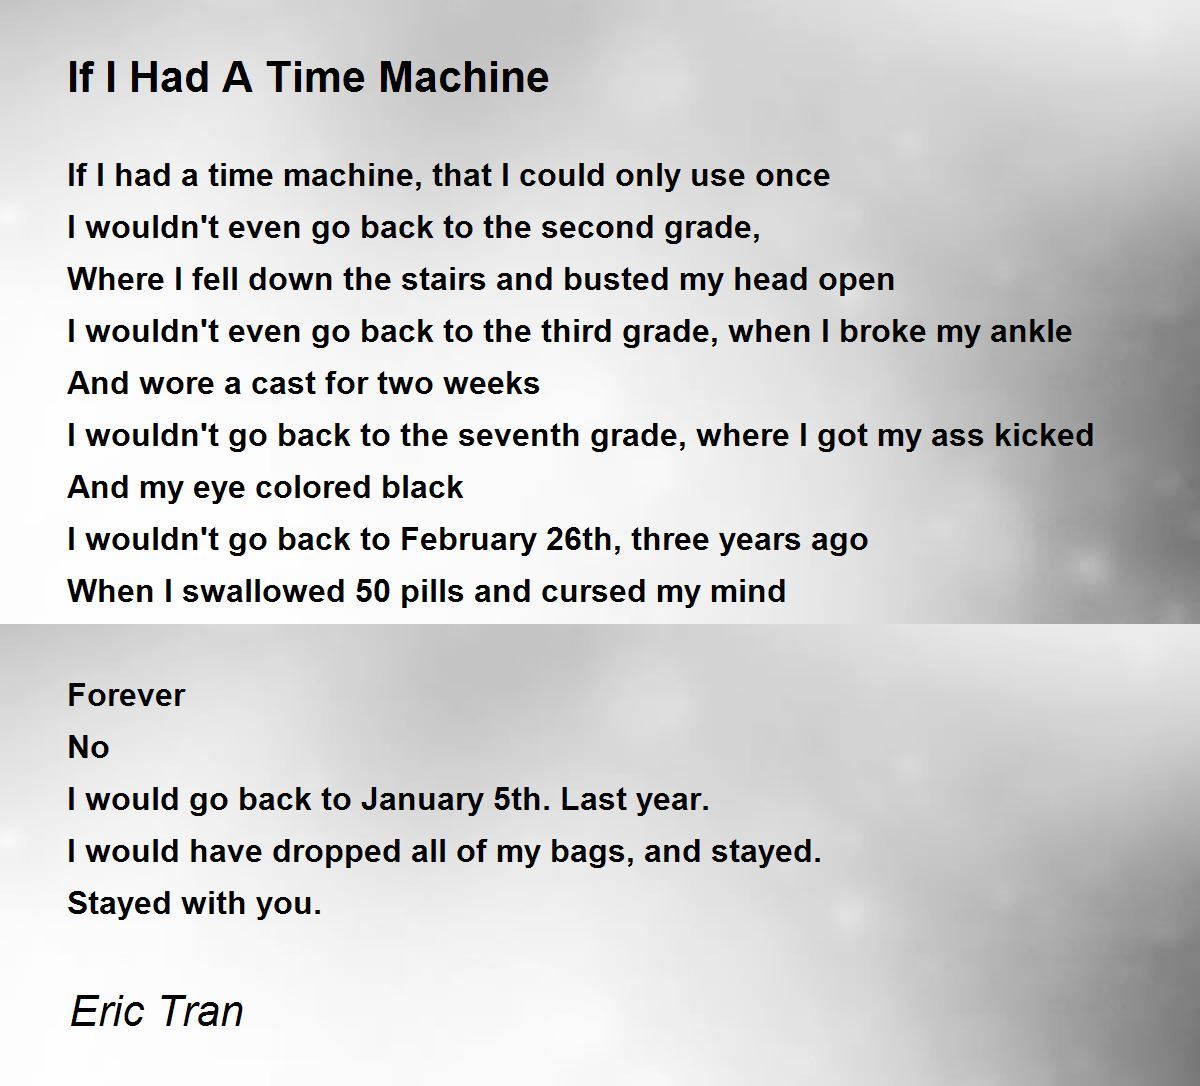 write an essay on if i had a time machine